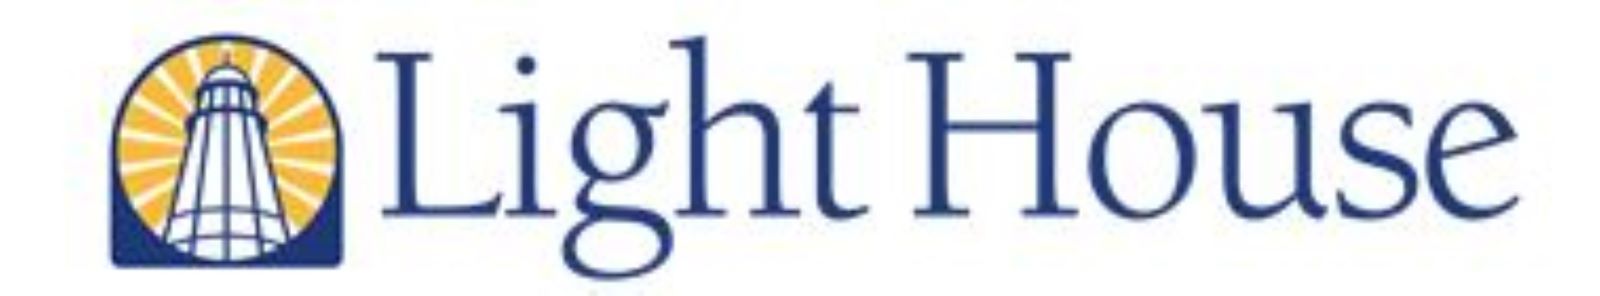 Lighthouse Shelter Logo